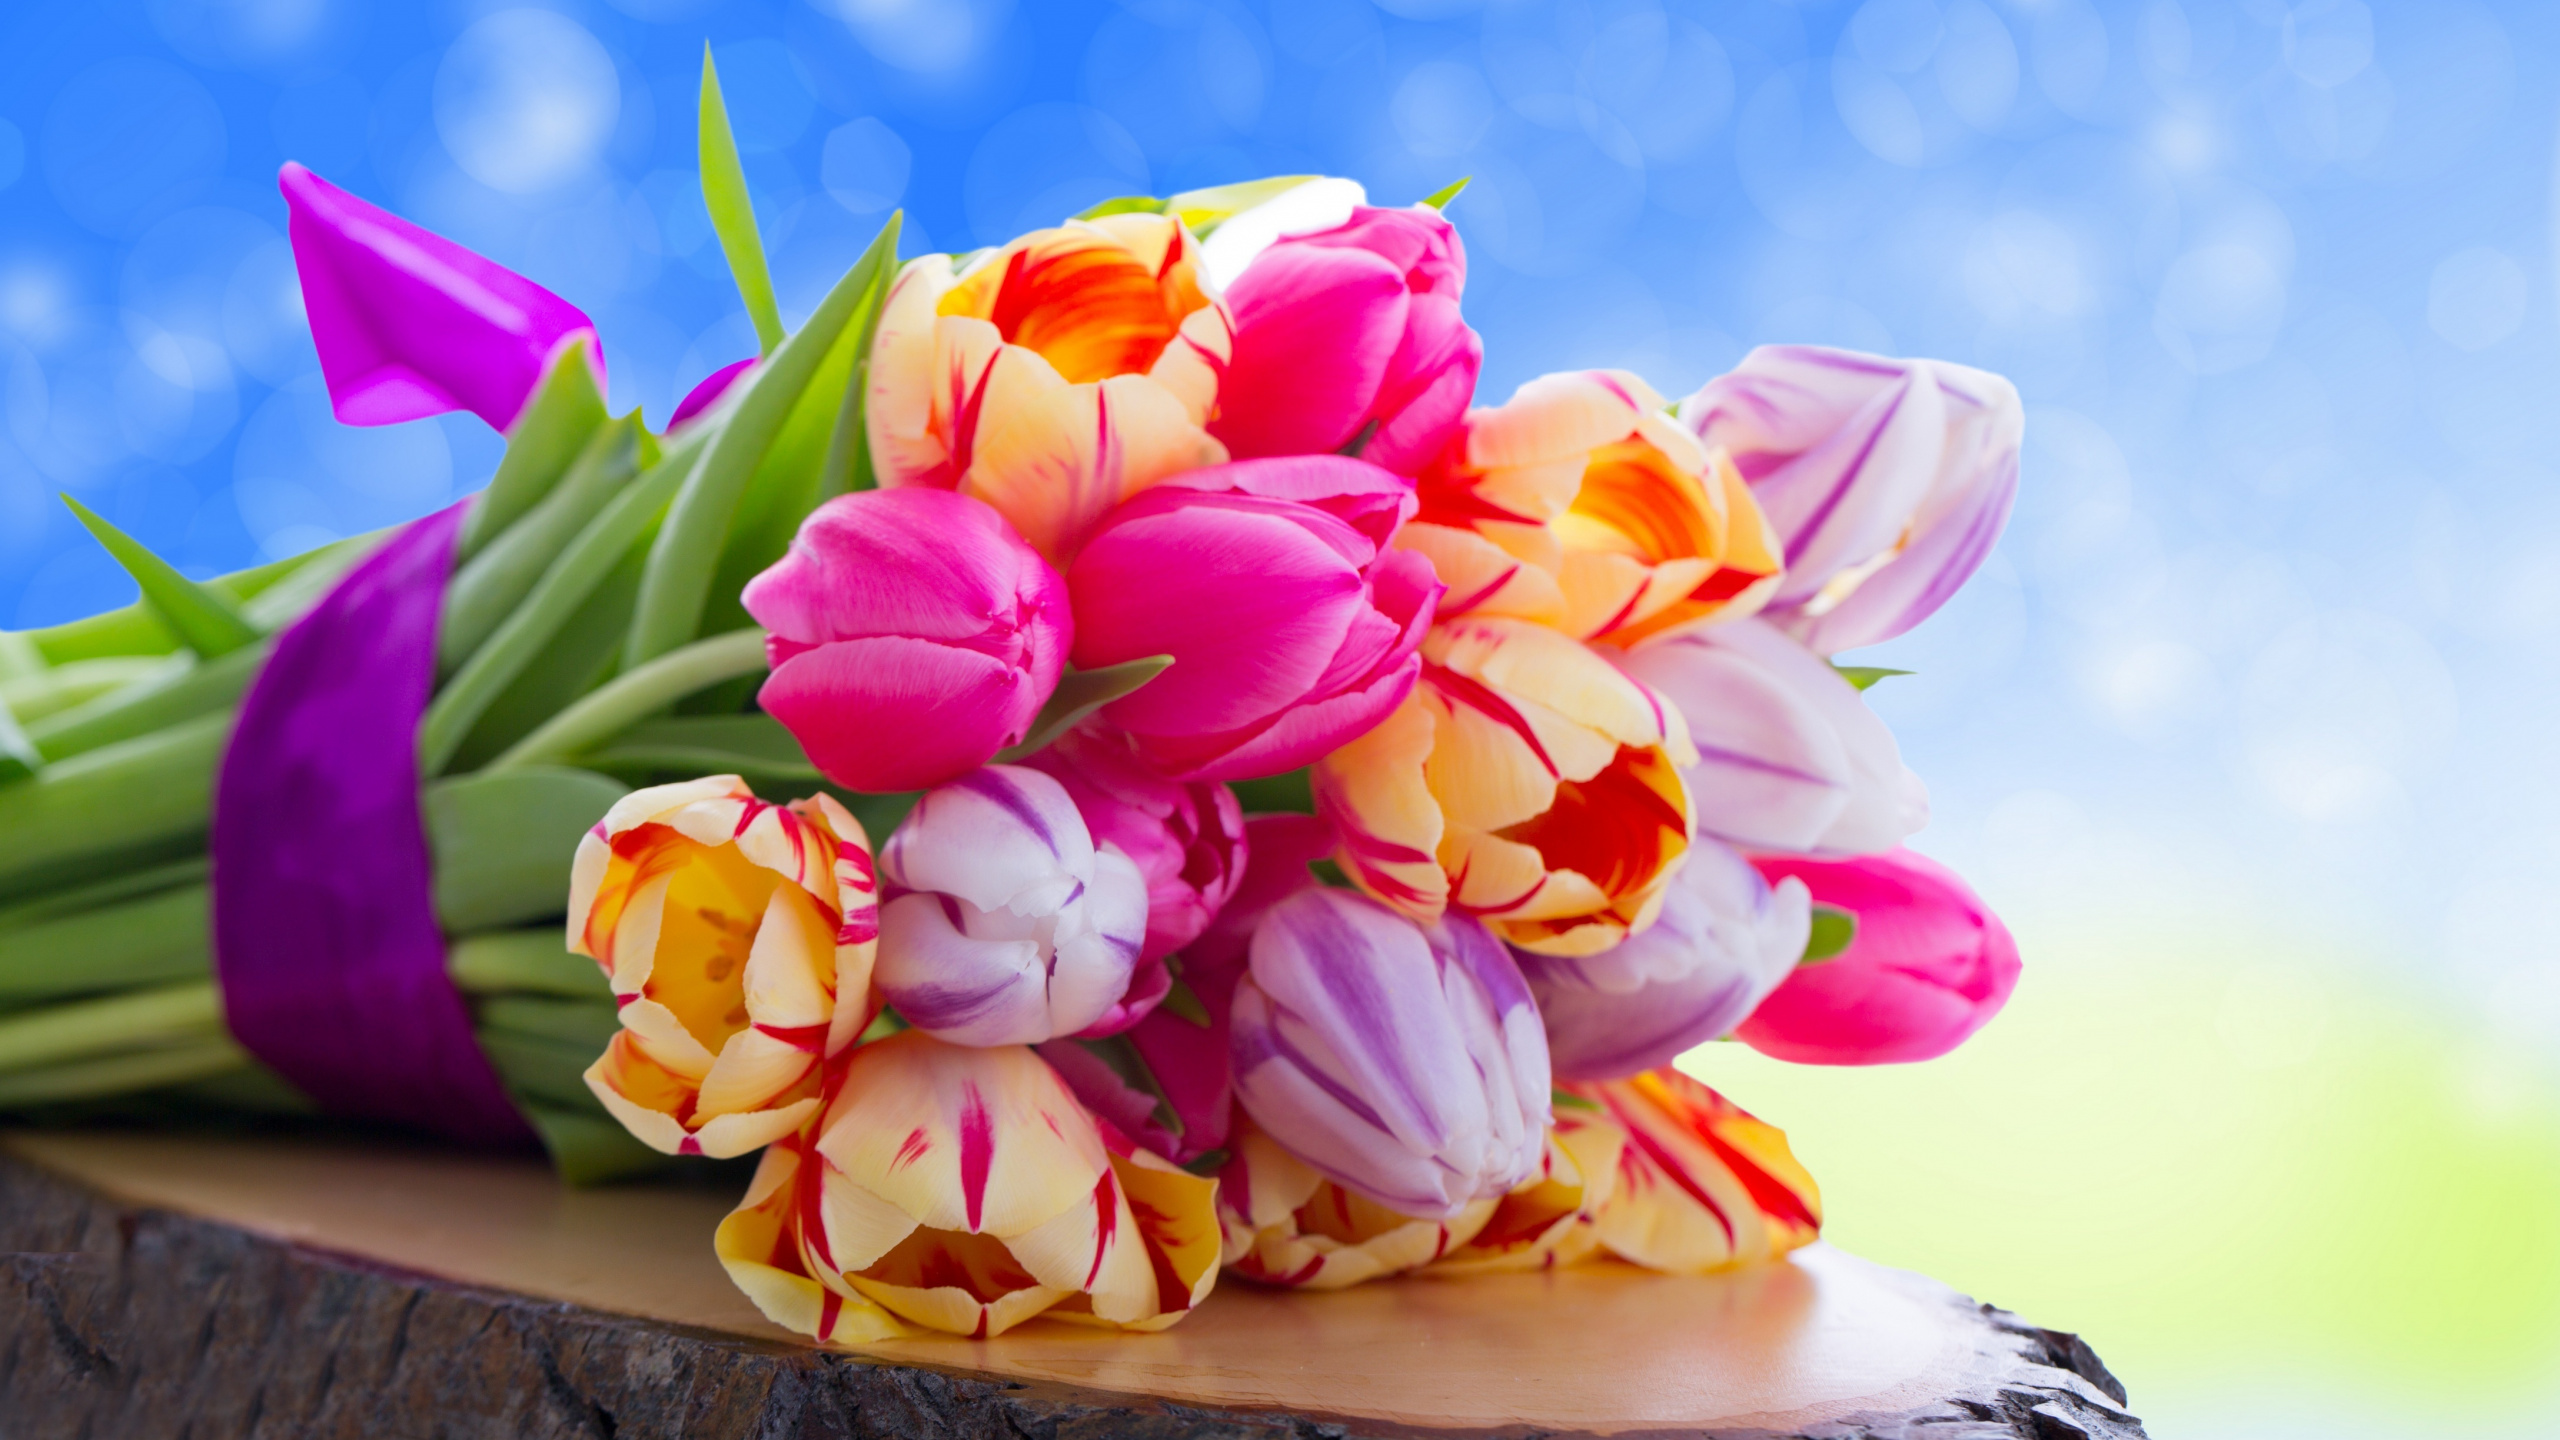 Bouquet de Tulipes Roses et Jaunes. Wallpaper in 2560x1440 Resolution